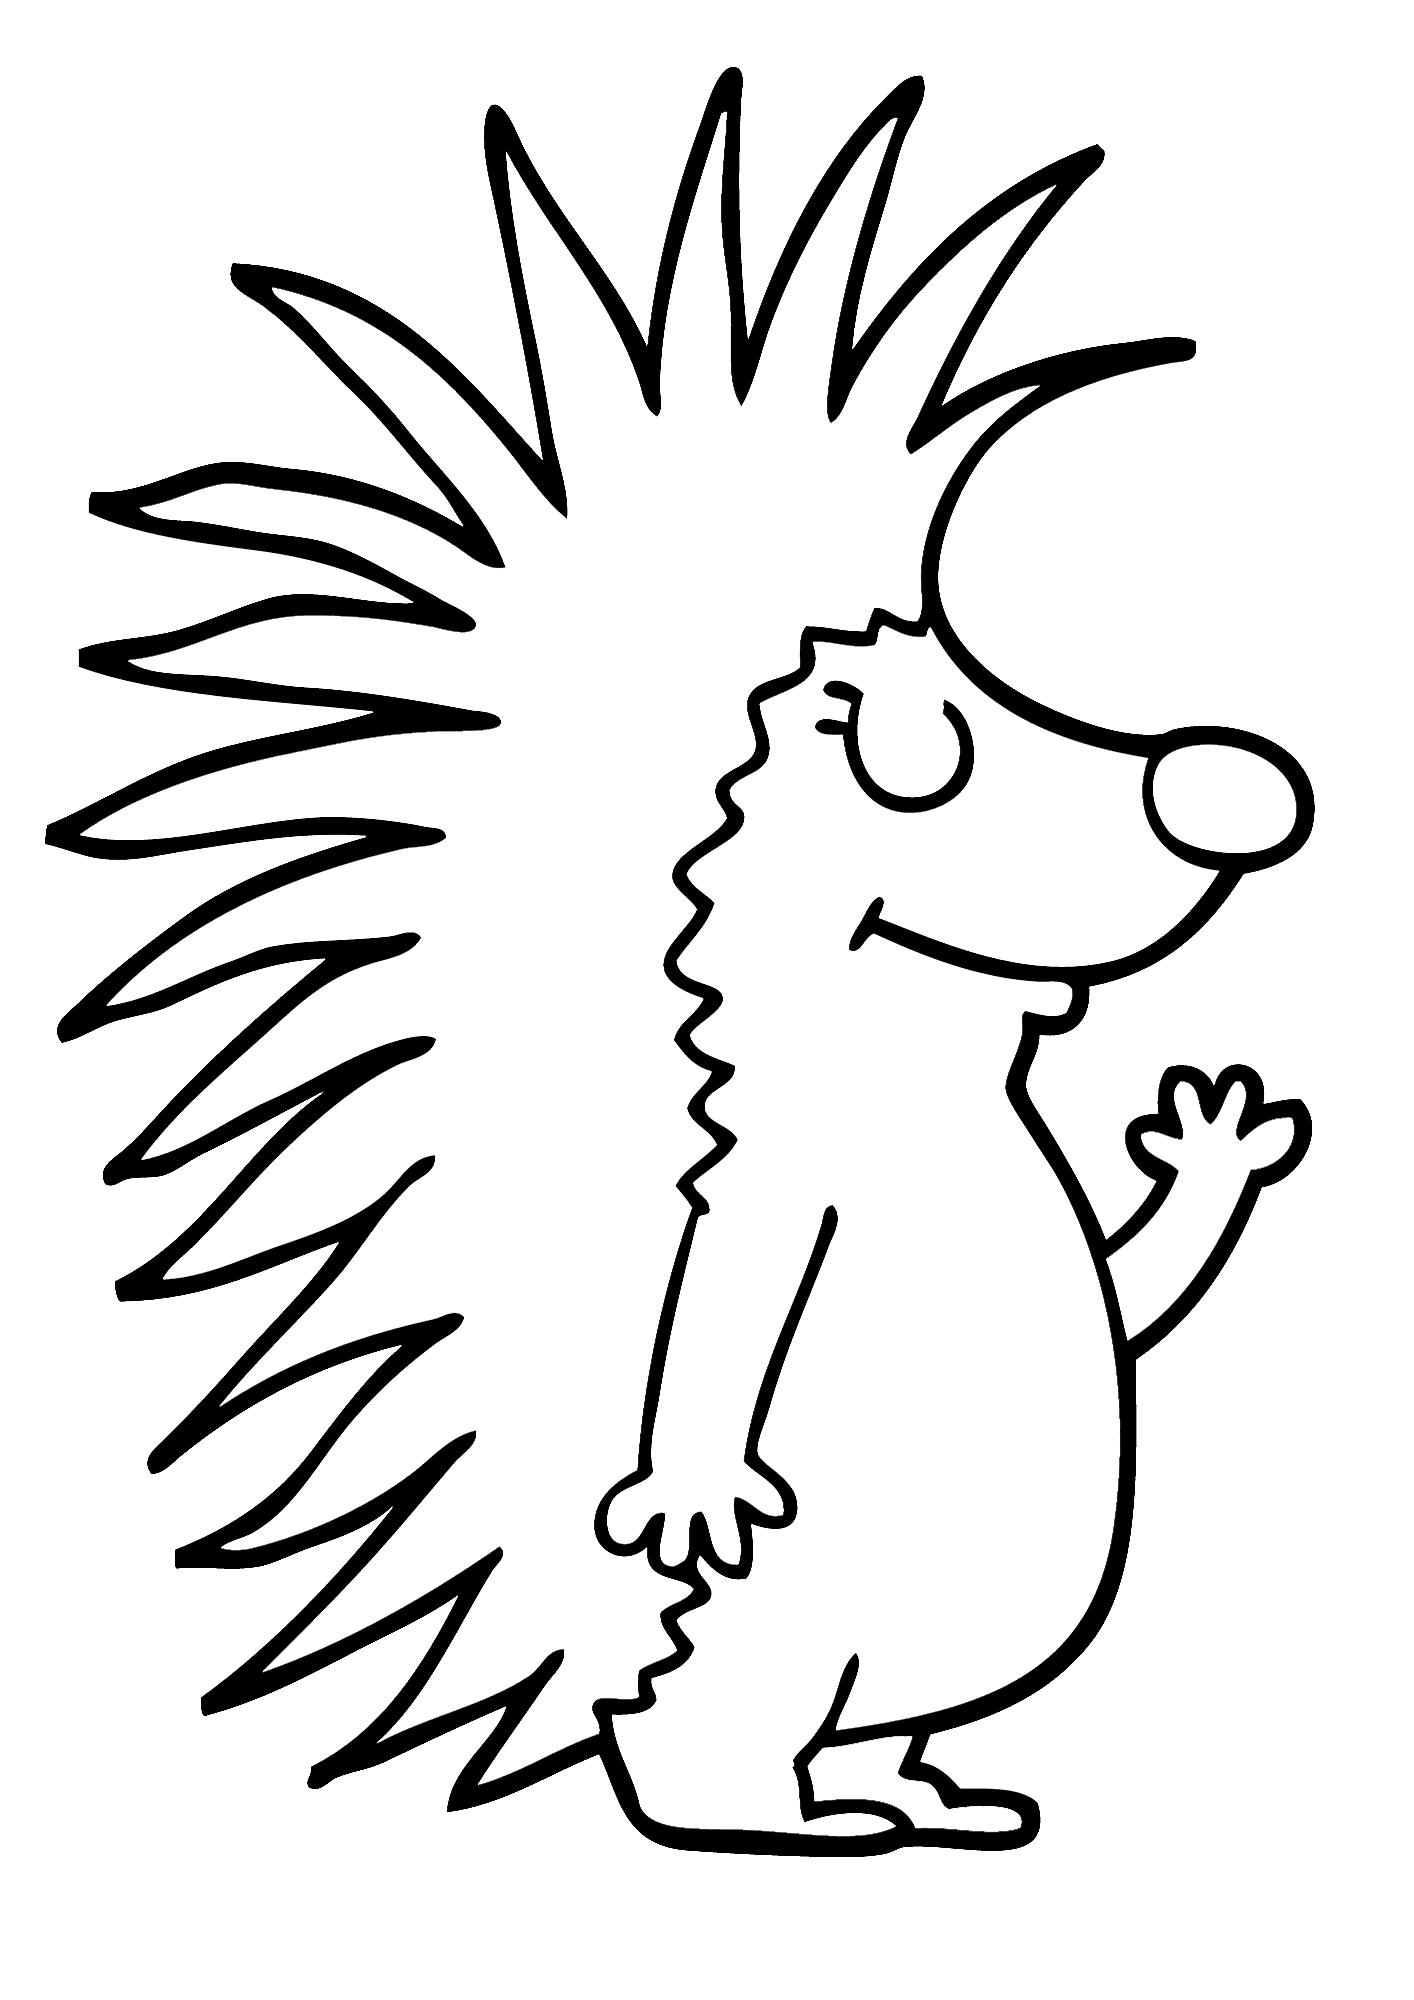 Hedgehog Image For Kids Coloring Page